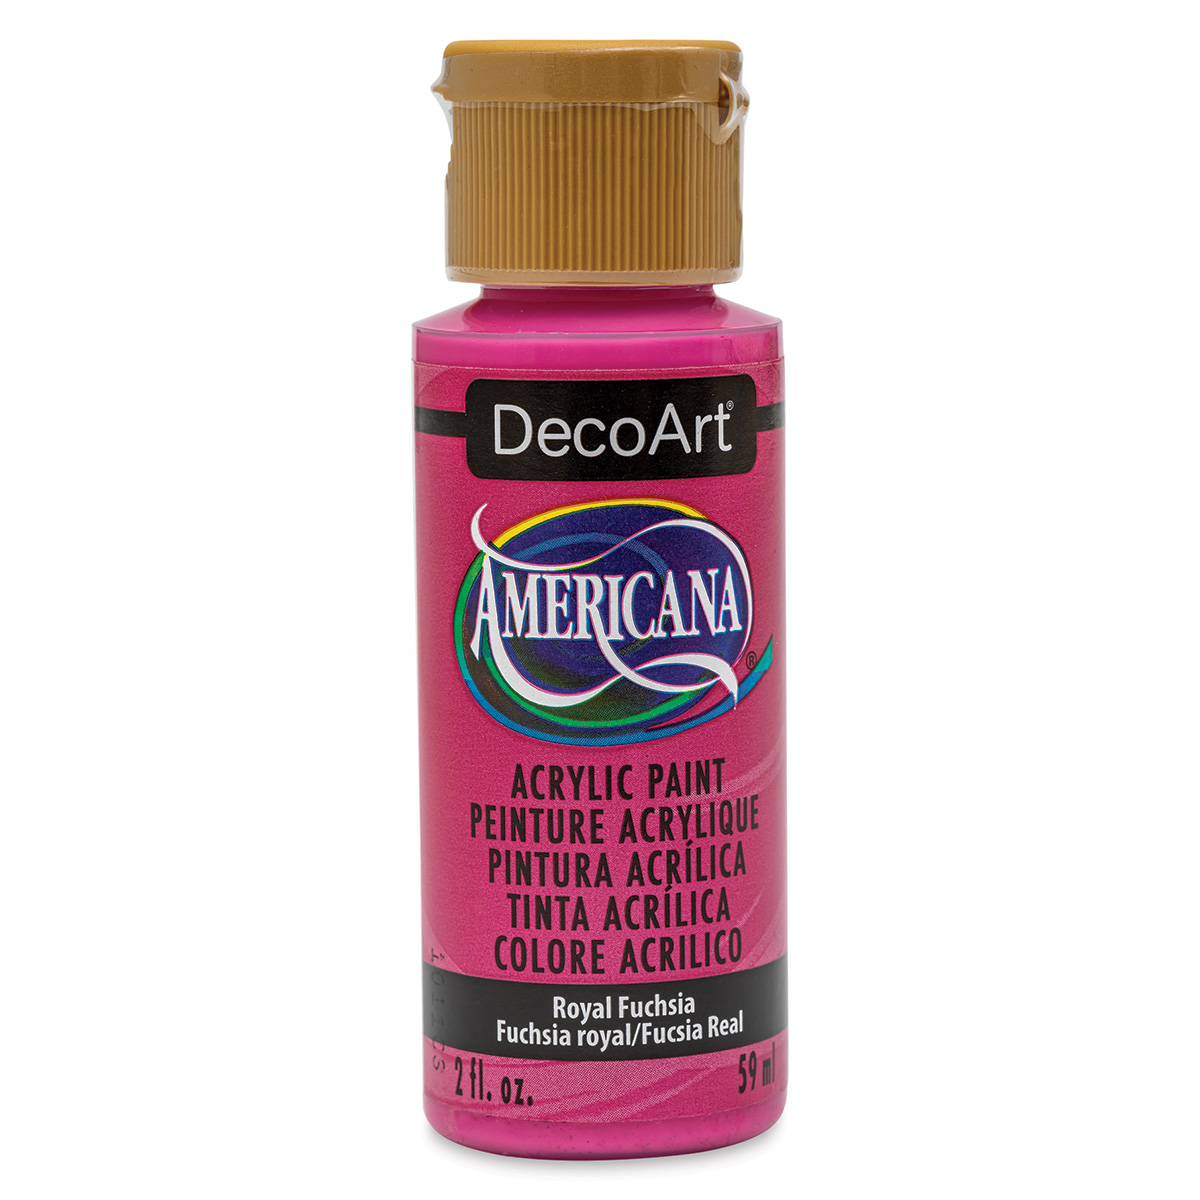 DecoArt Americana Acrylic Paint - Baby Pink, 2 oz